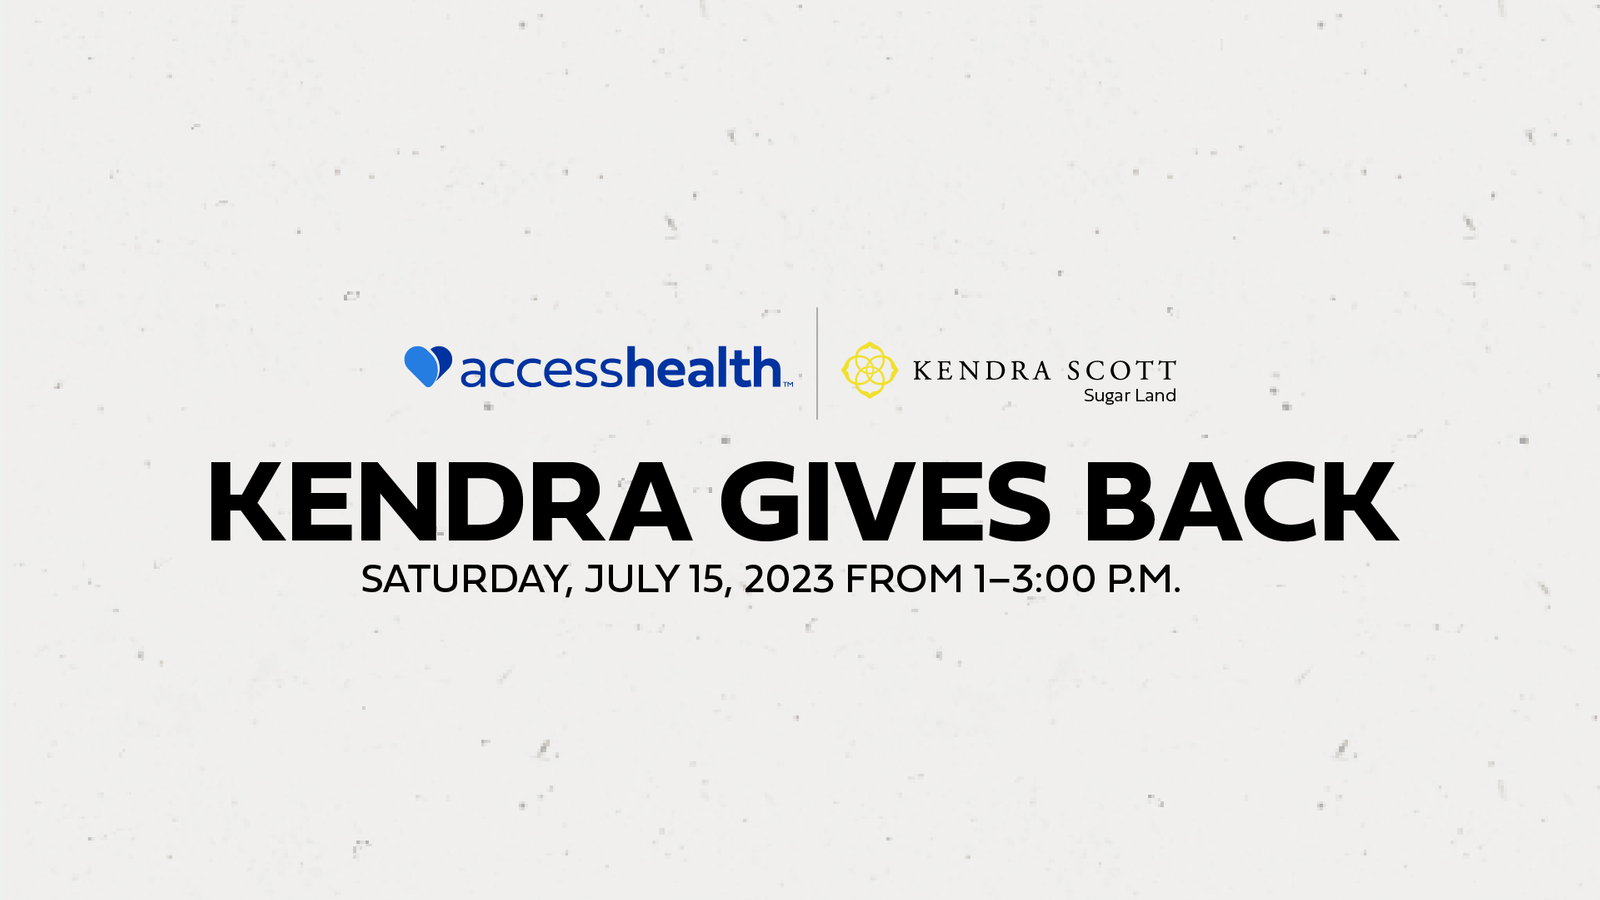 Kendra Gives Back to AccessHealth